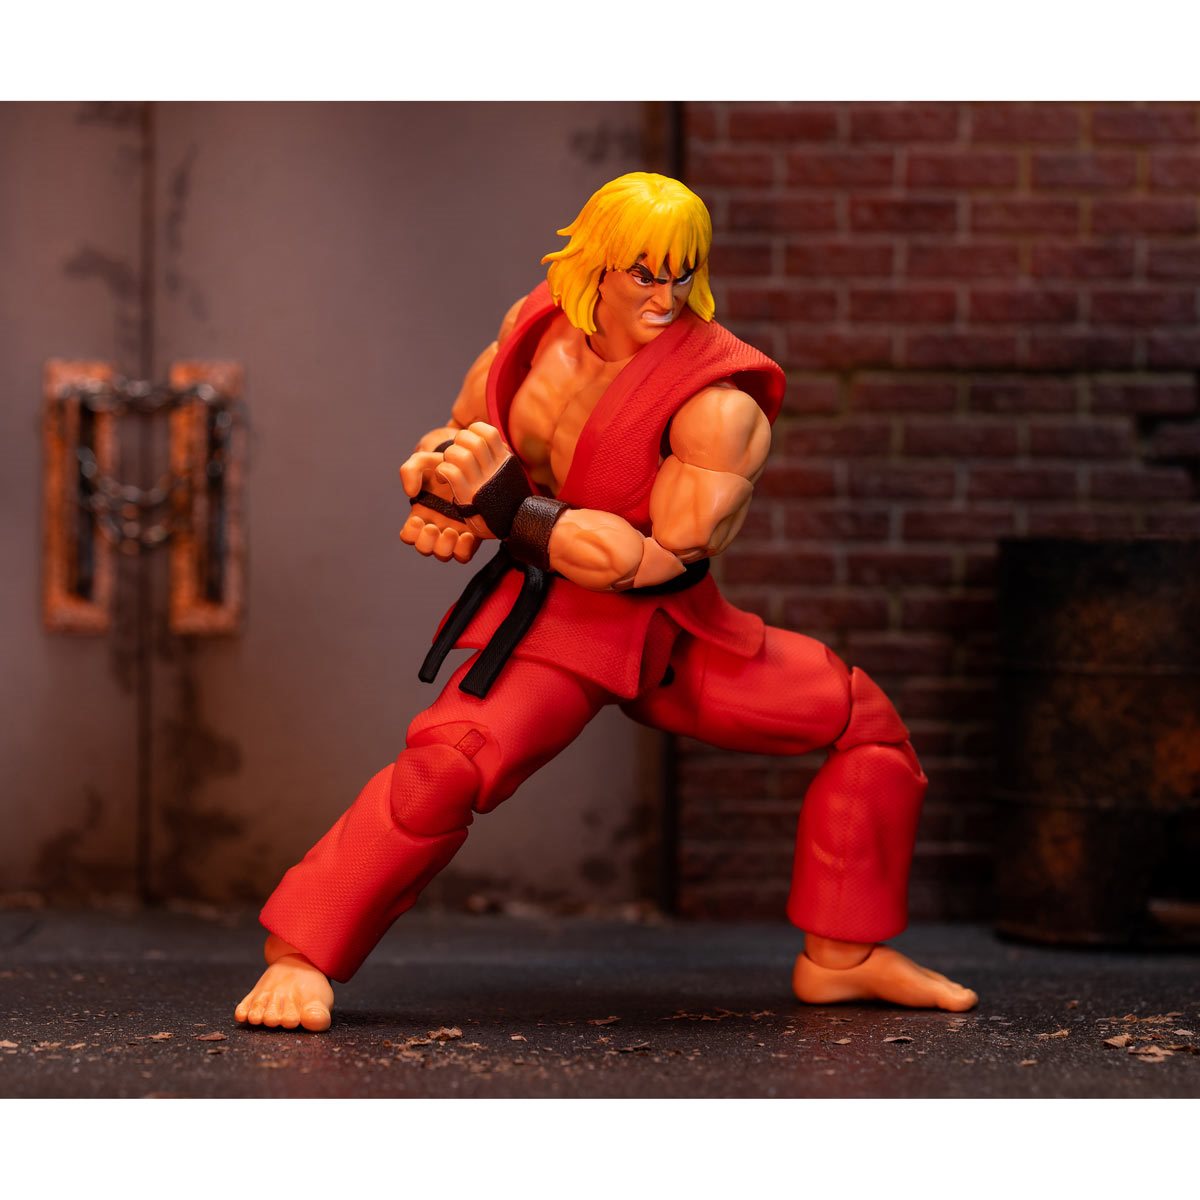 Jada Toys Ultra Street Fighter II: RYU 6inch Action Figure